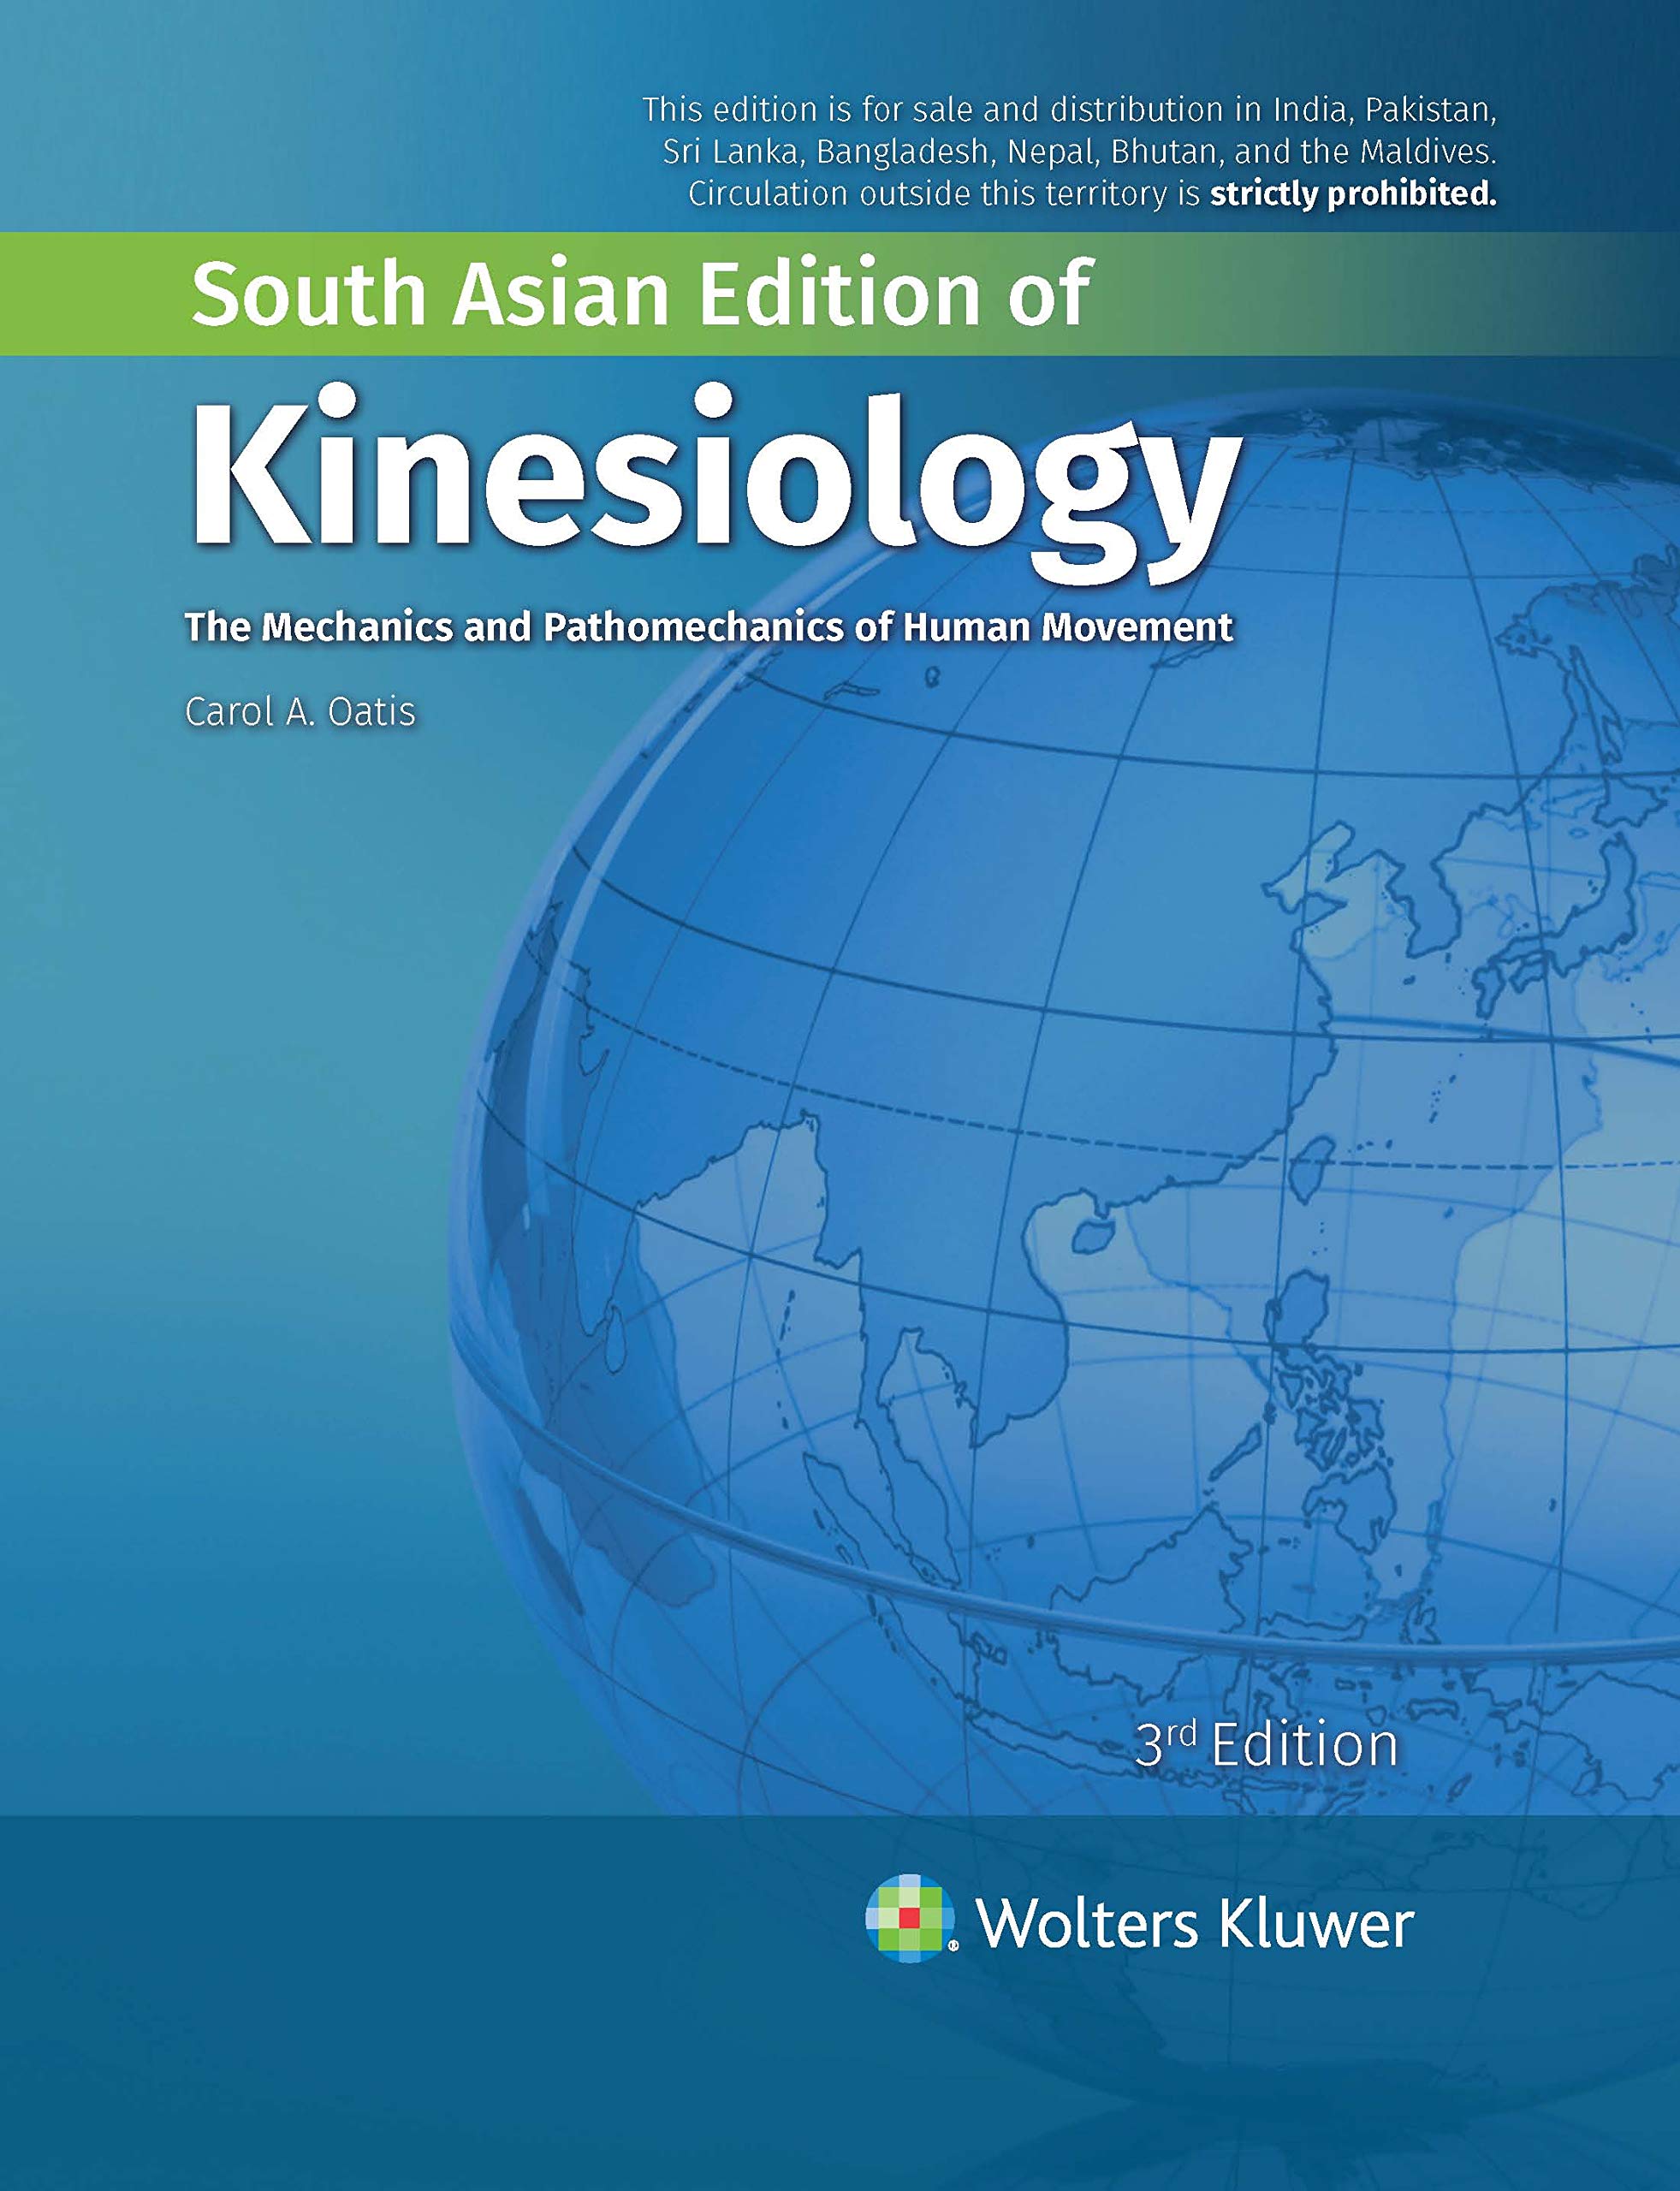 Kinesiology: The Mechanics And Pathomechanics Of Human Movement, 3Rd Edition - AIBH Exclusive